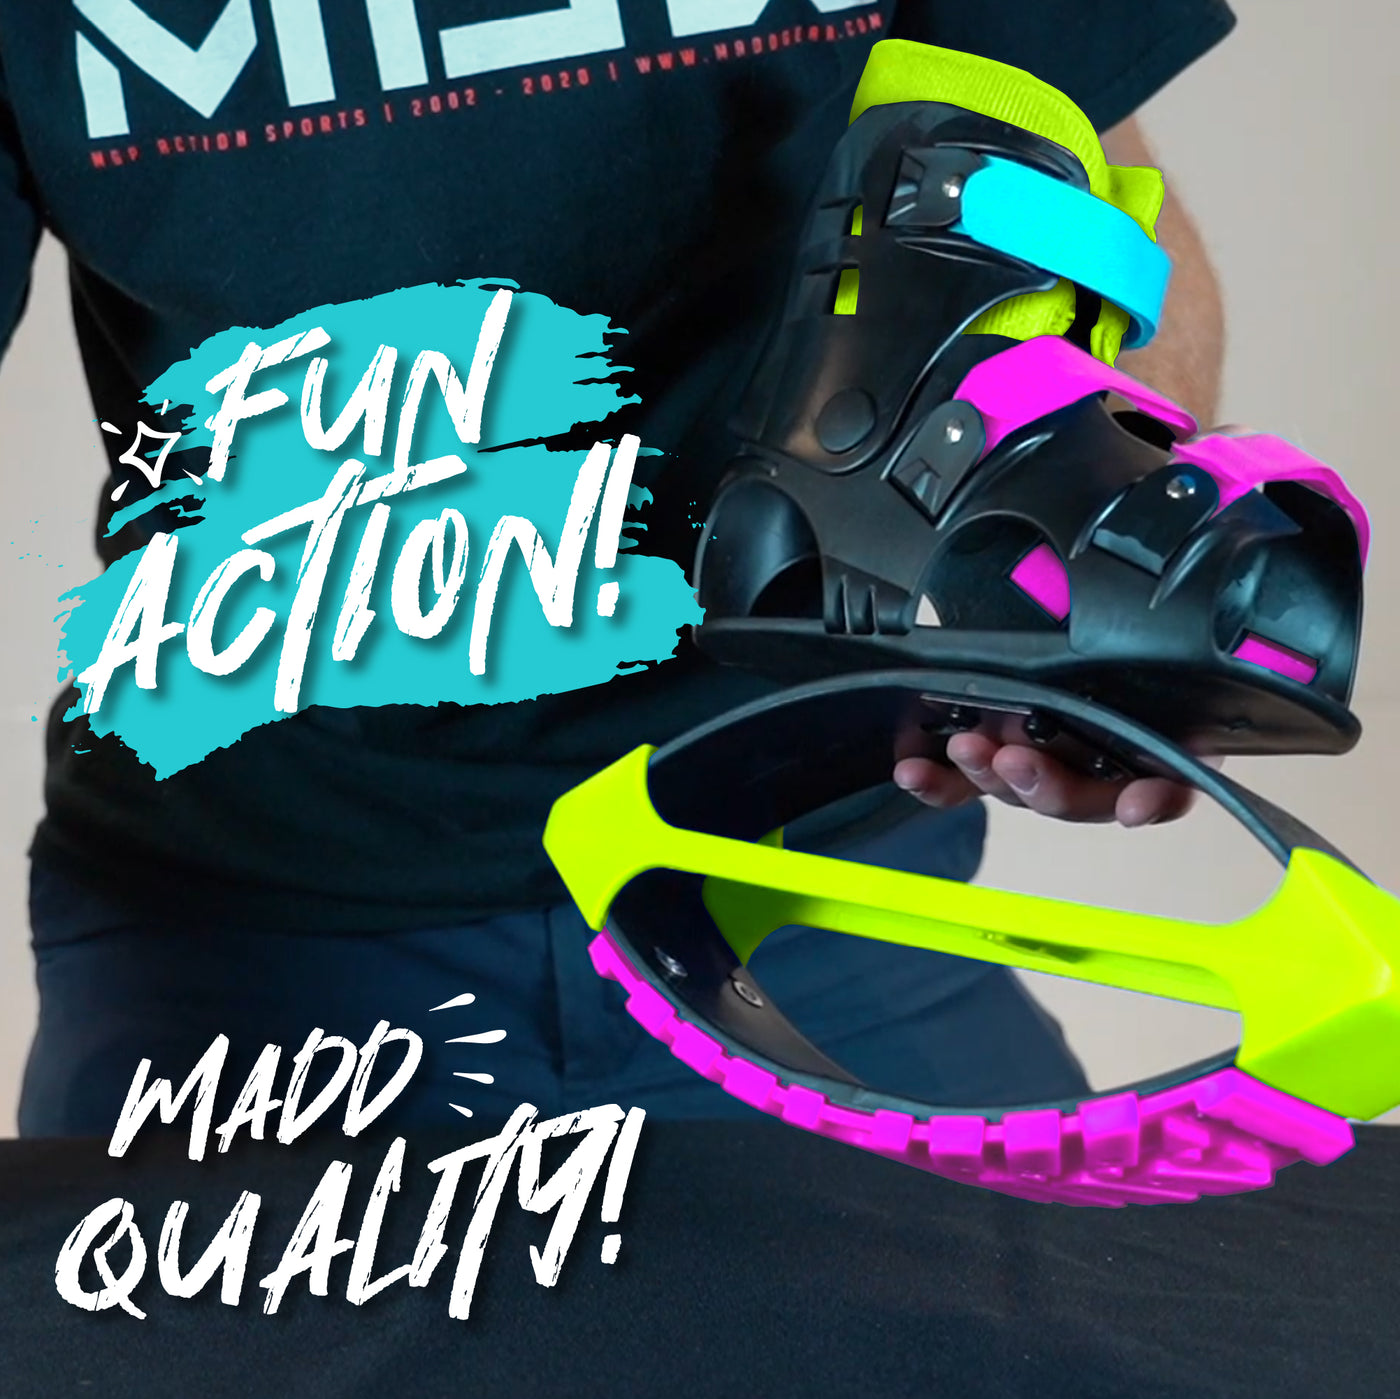 Madd Gear Boosters Boost Boots Kangaroo Bouncing Kanga Jumping Shoes Pink Lime Kids Boys Girls Fun